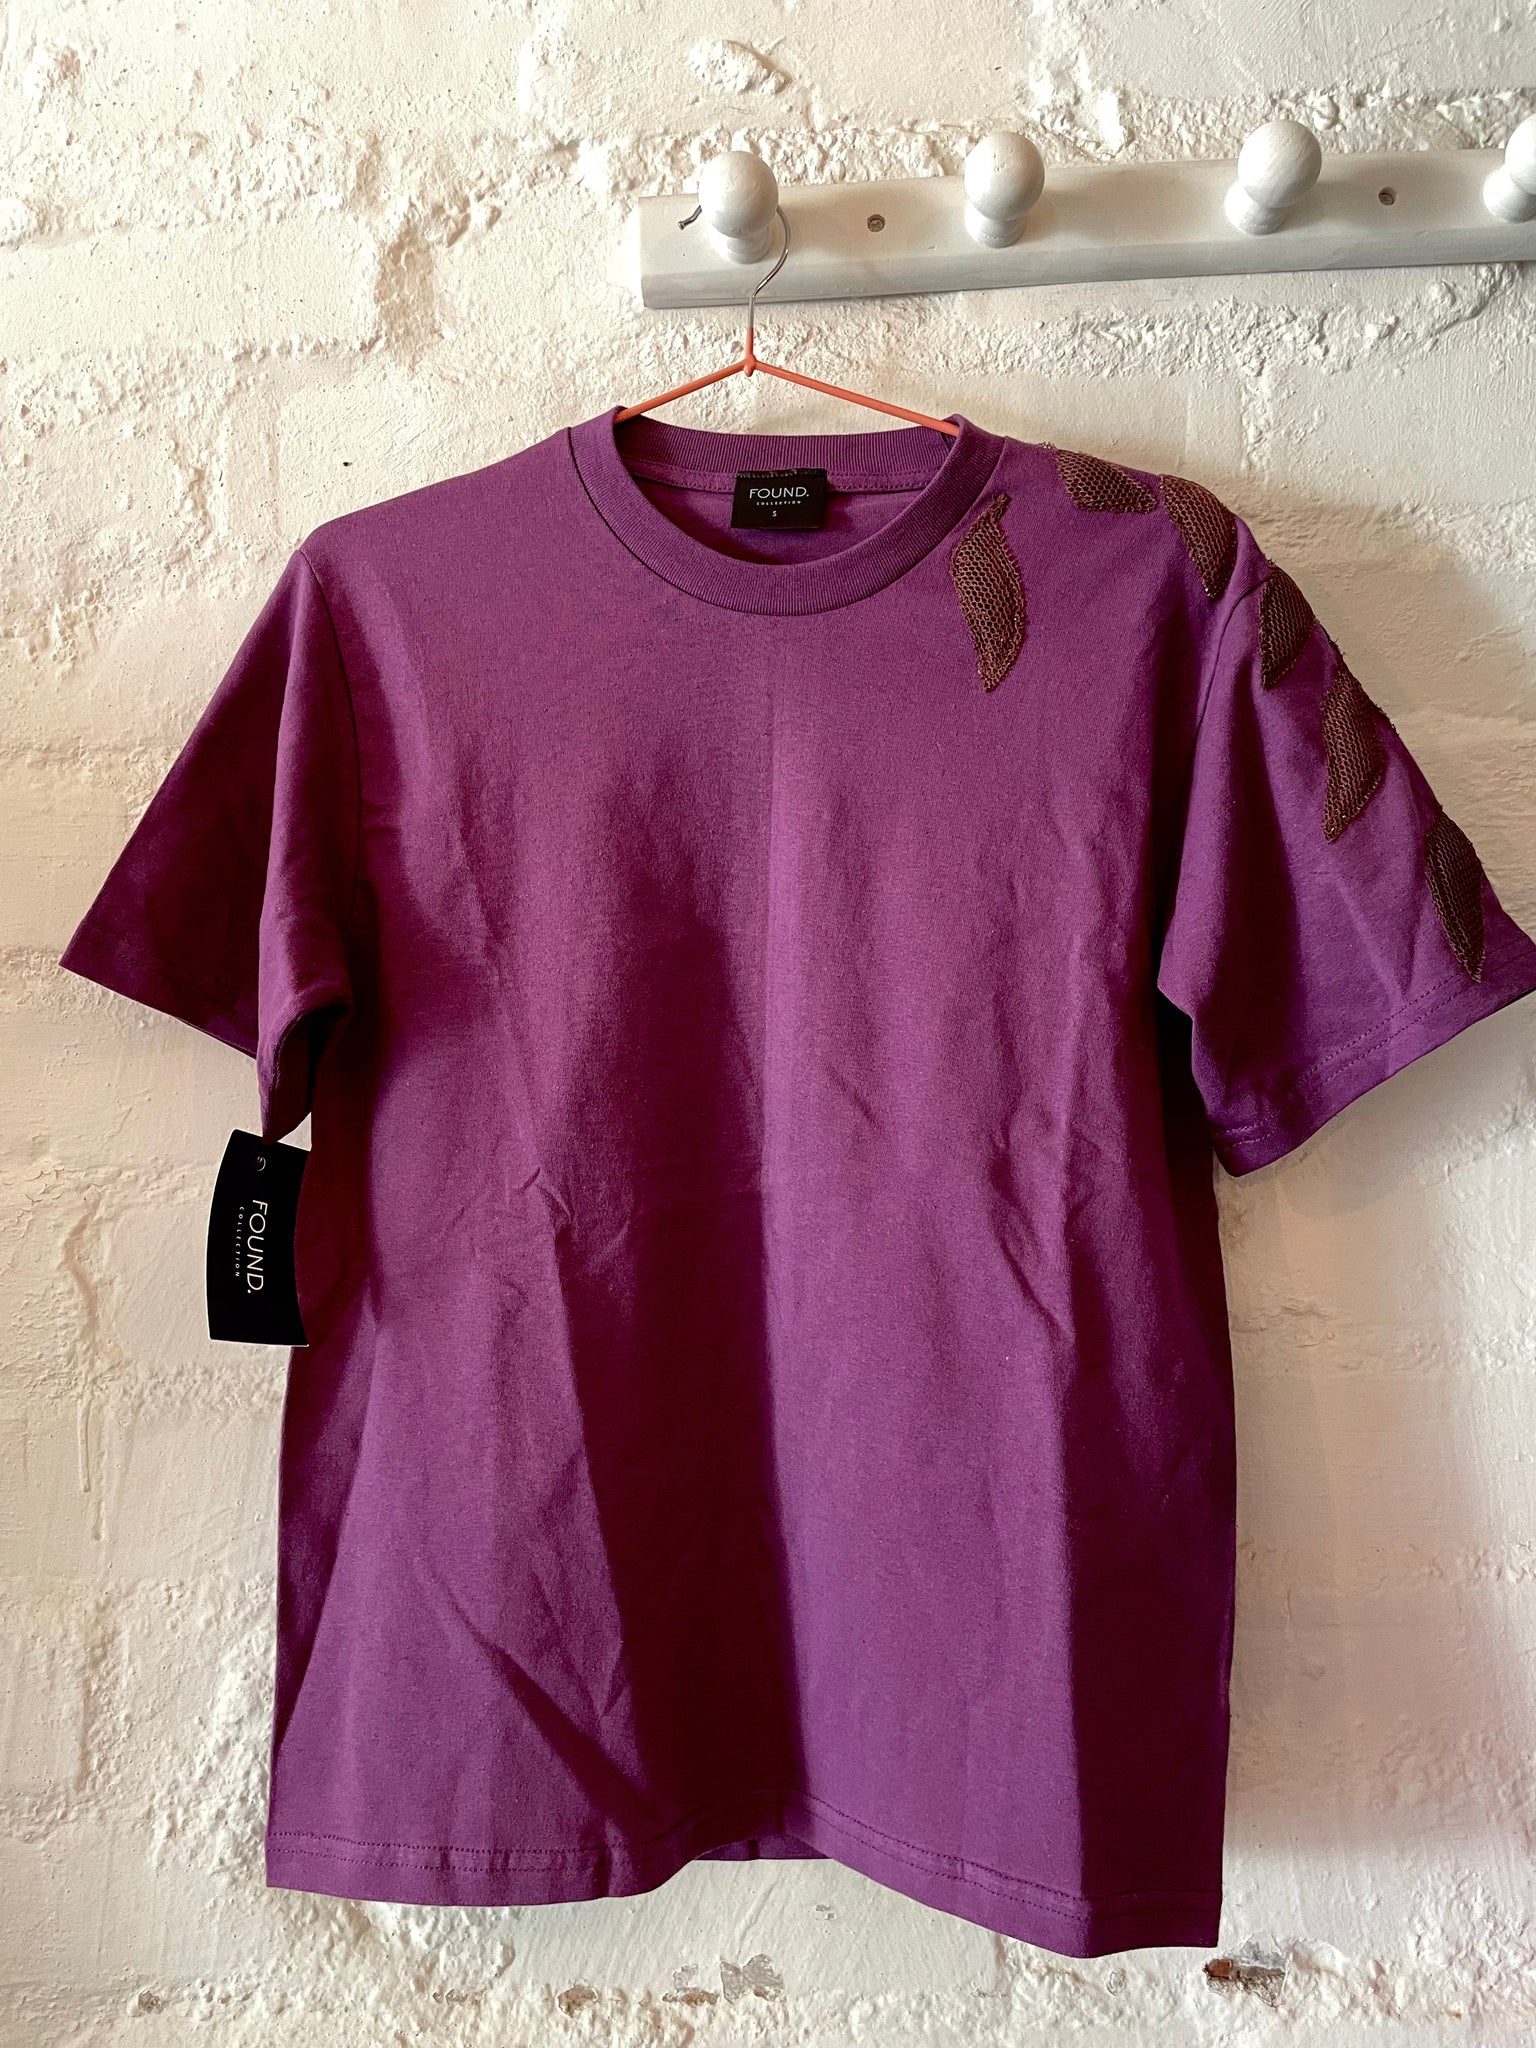 PURPLE FOLIAGE  | T-shirt selection (R100 off any 2 t-shirt +sweater combo)